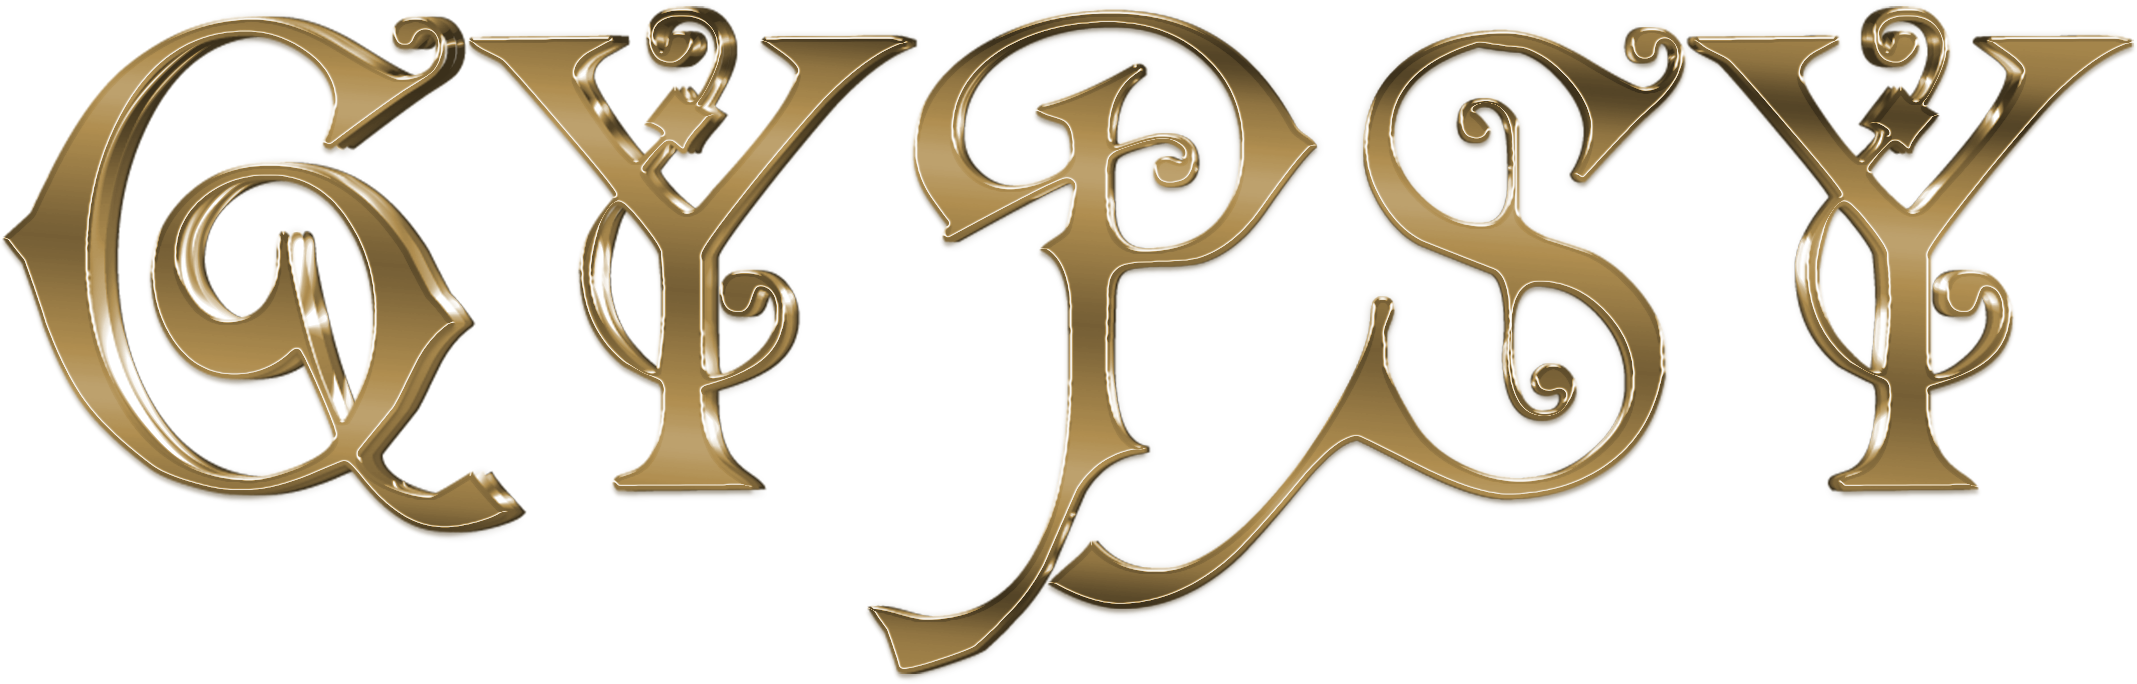 GYPSY logo bronze